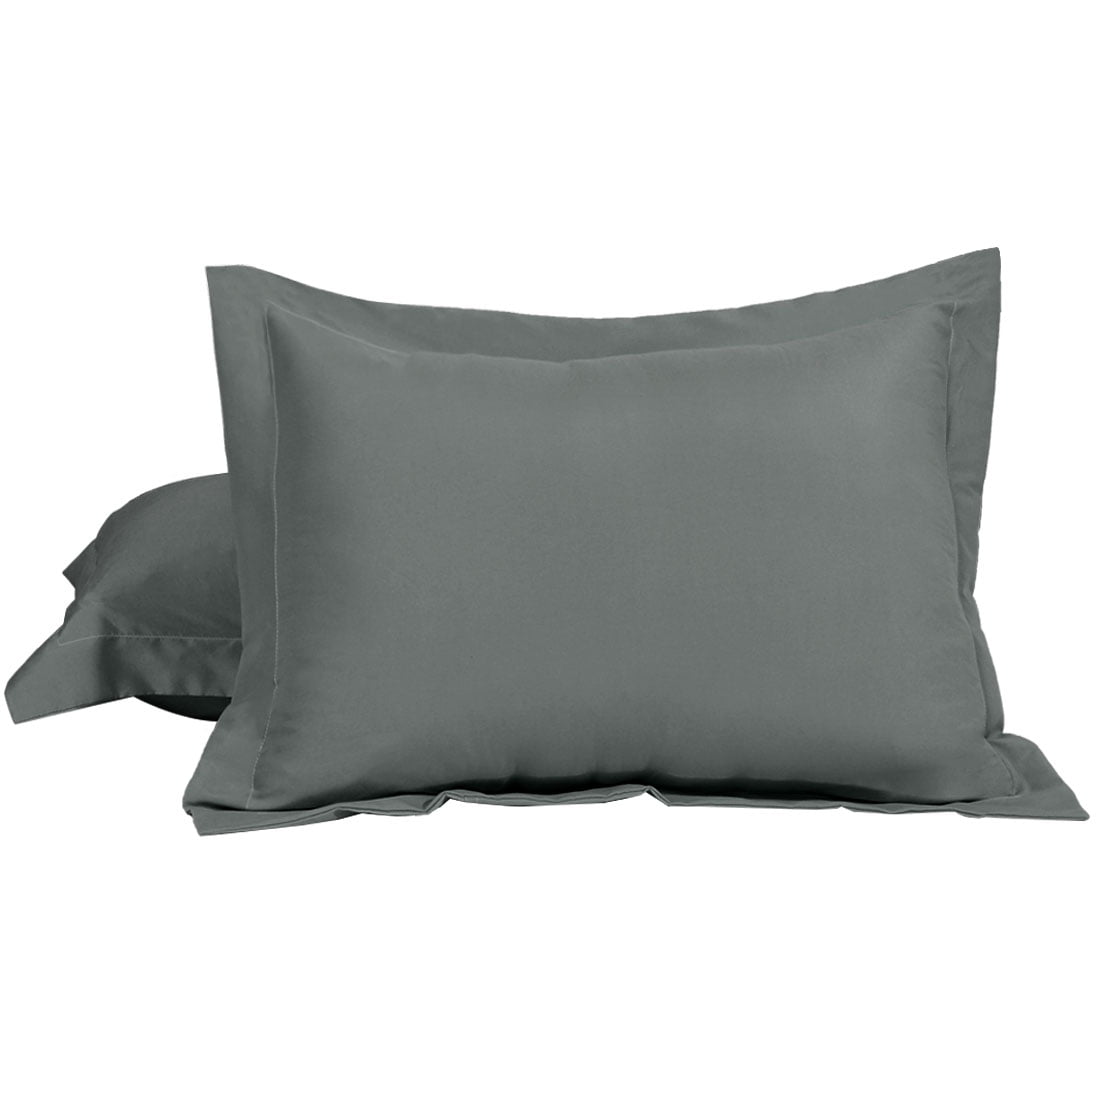 Navy Blue Envelope Style EPS for Pillows Sized 13x18 and 14x19-100% Egypitan Cotton Set of 2 Toddler Pillowcases/Travel Pillowcase 400 Thread Count Quality